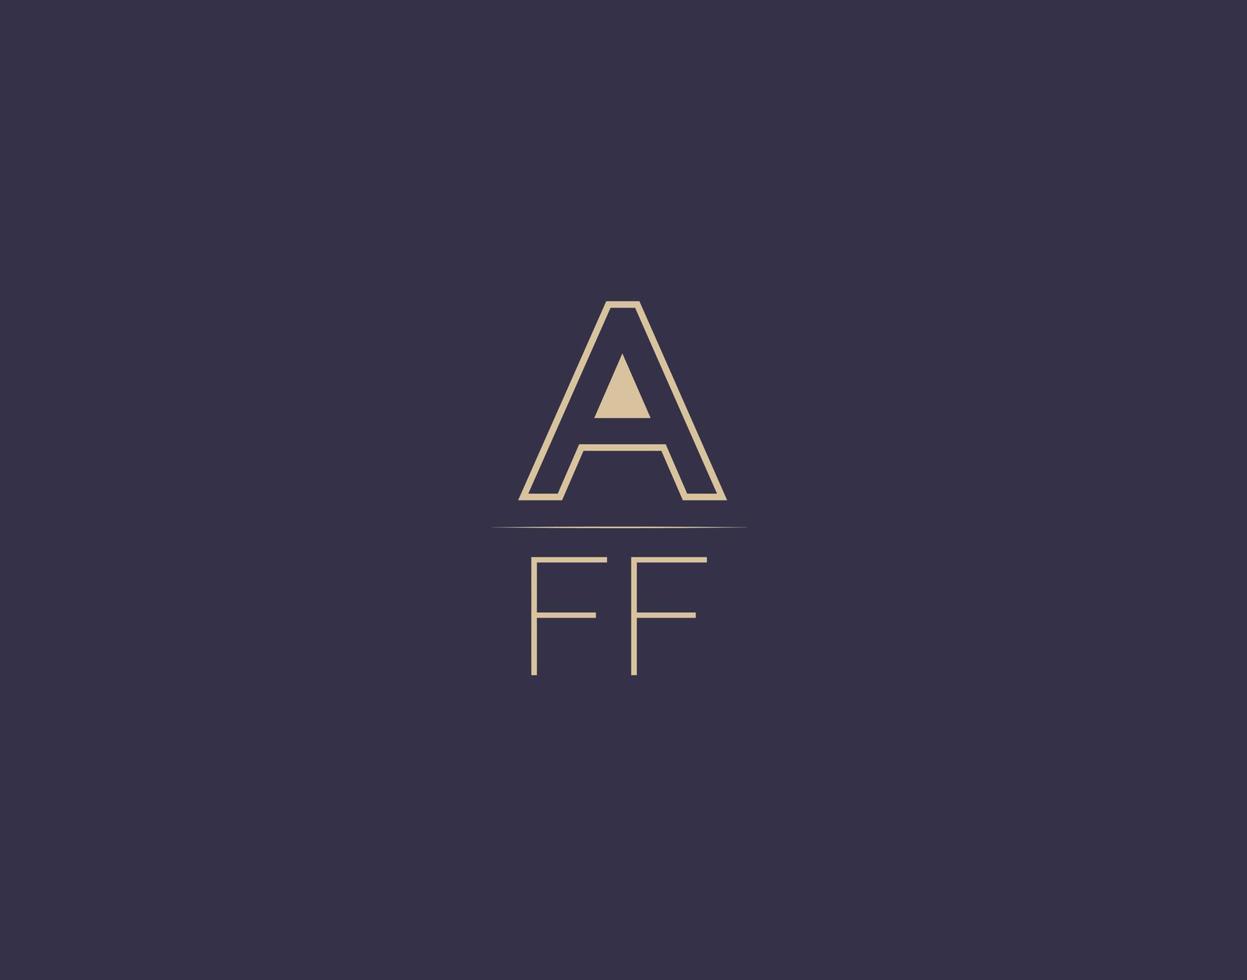 aff letter logo design imagens vetoriais minimalistas modernas vetor